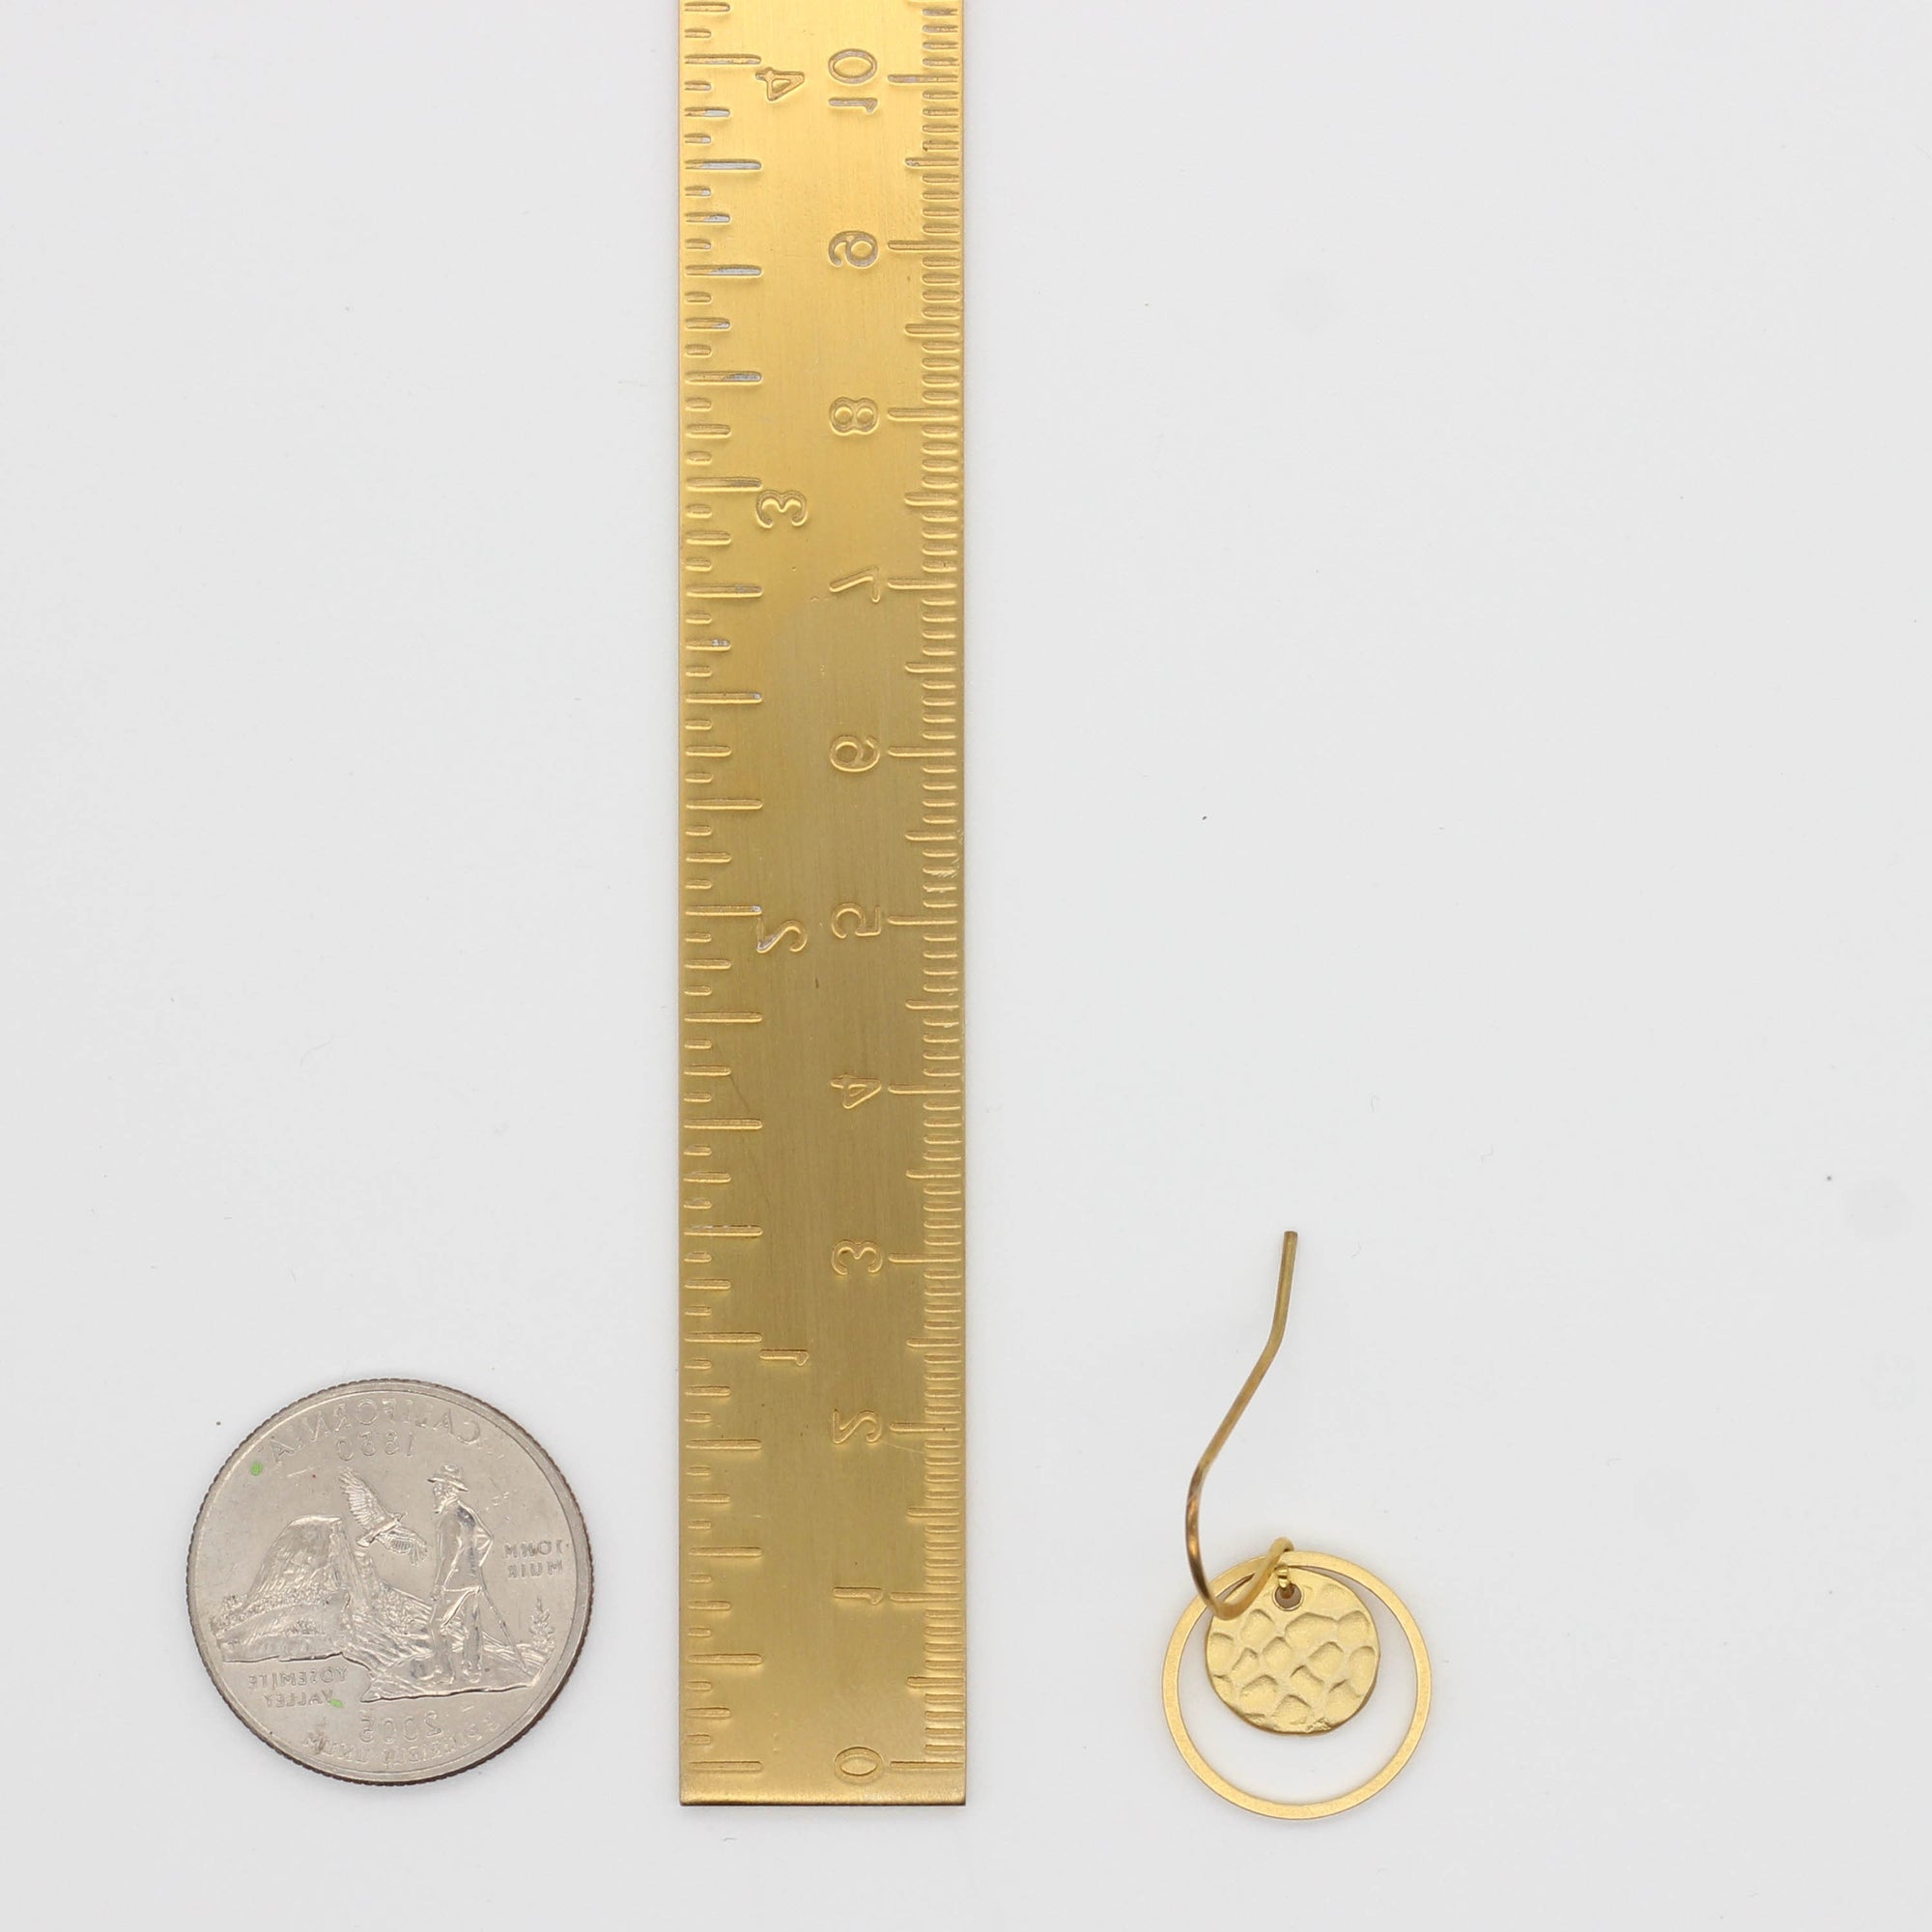 "L'Or" Tiny Gold Drop Dangle Earrings